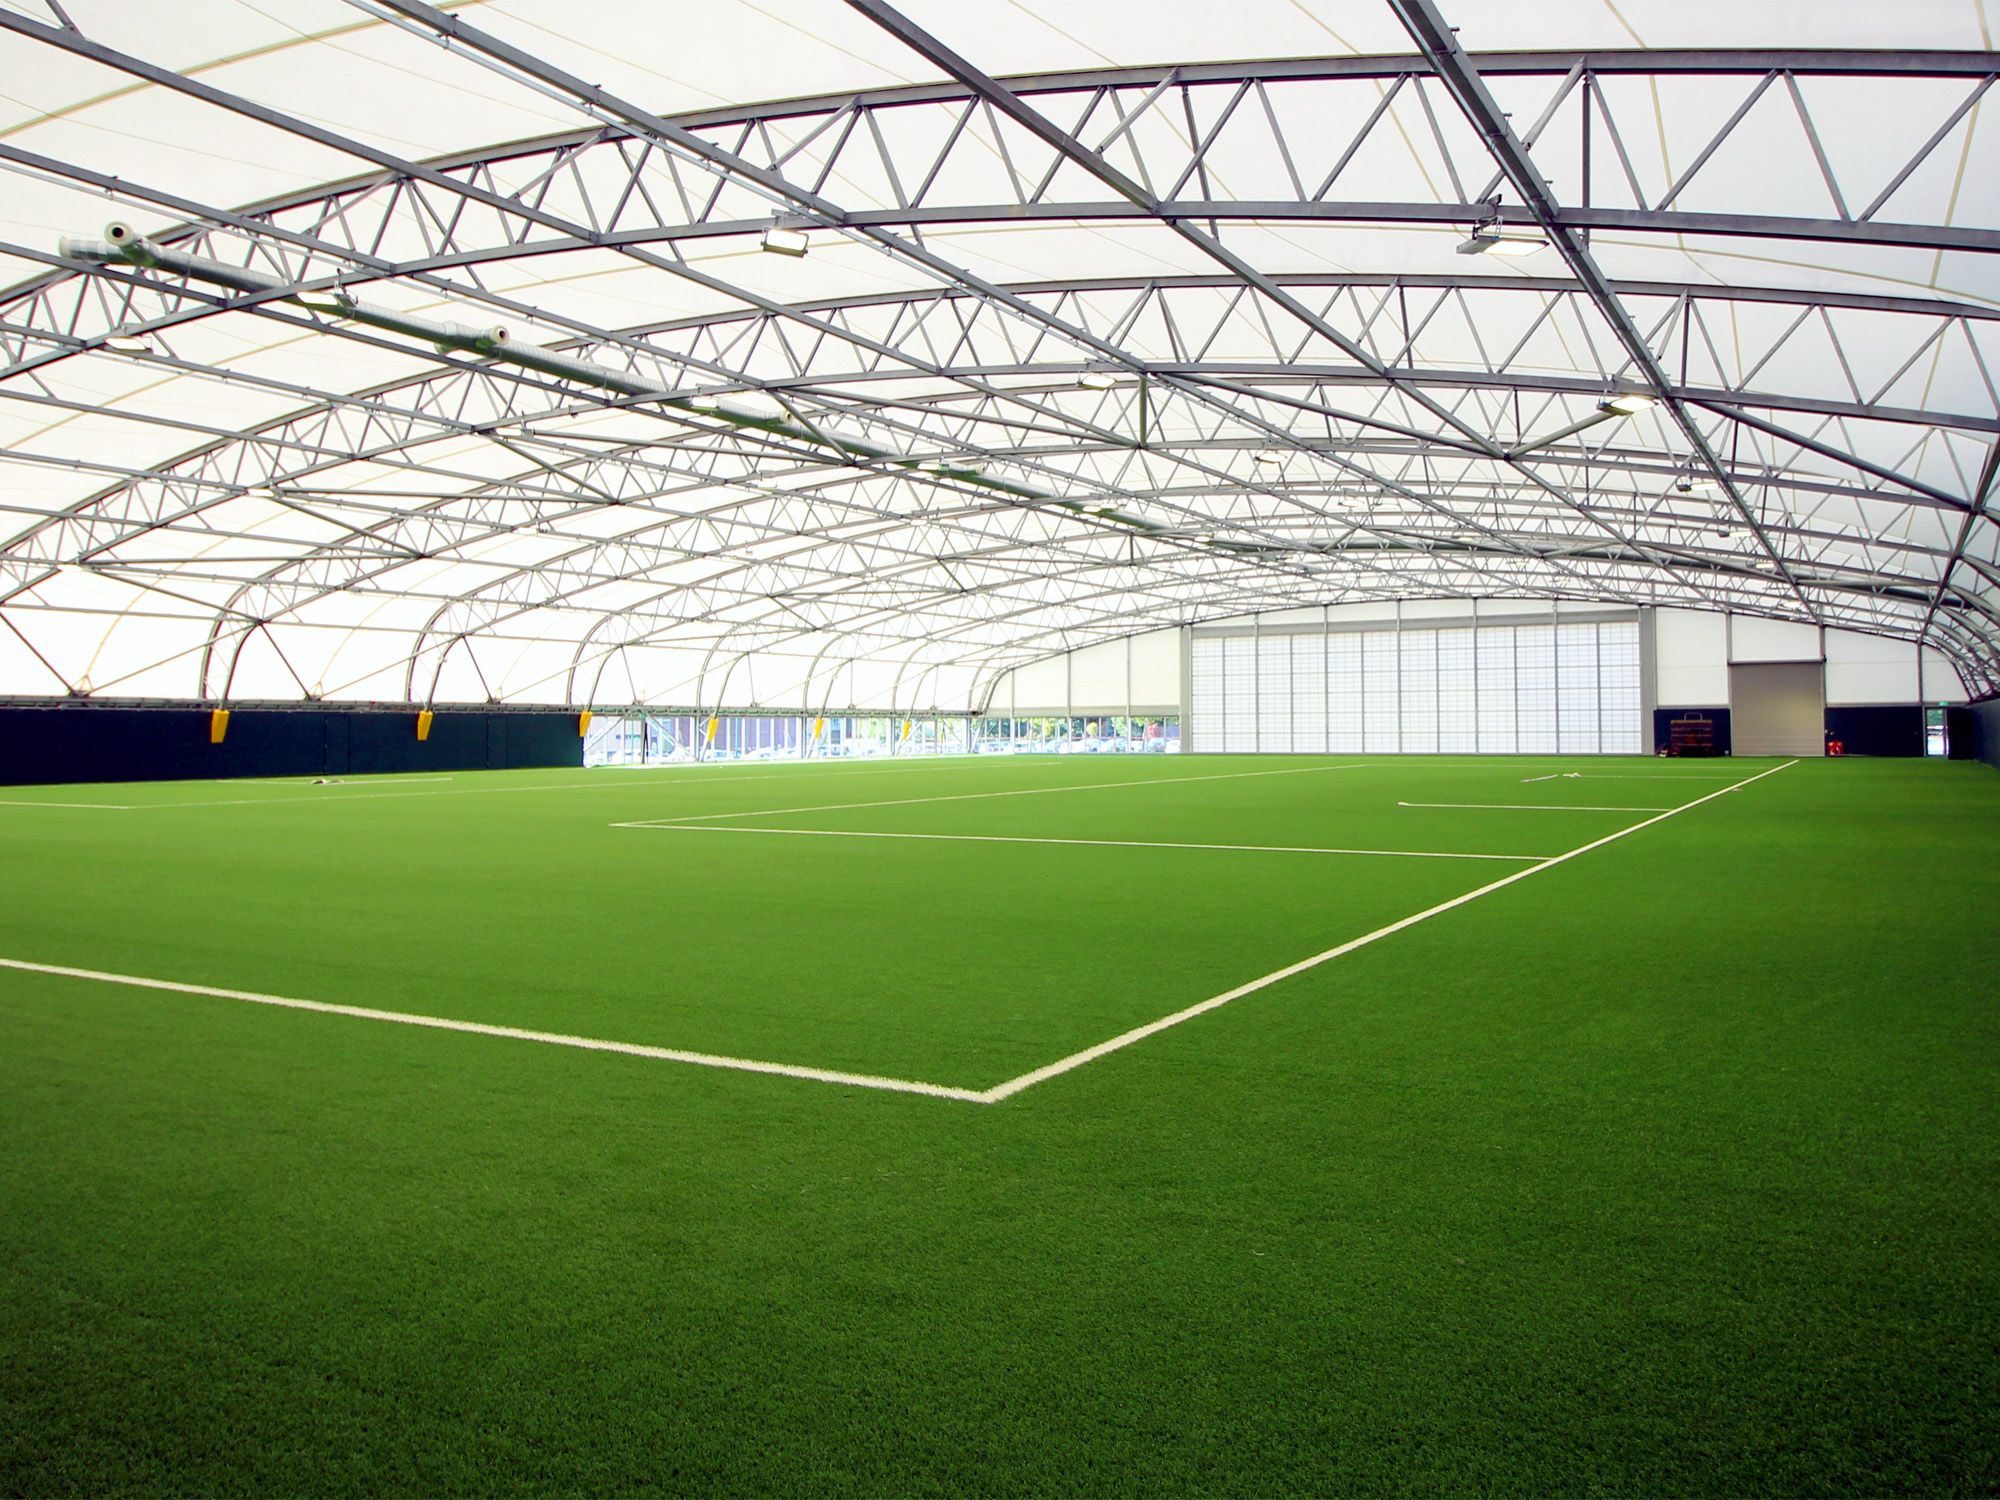  Chelsea FC Training Hall, designed using computational engineering and design by Fenton Holloway. 